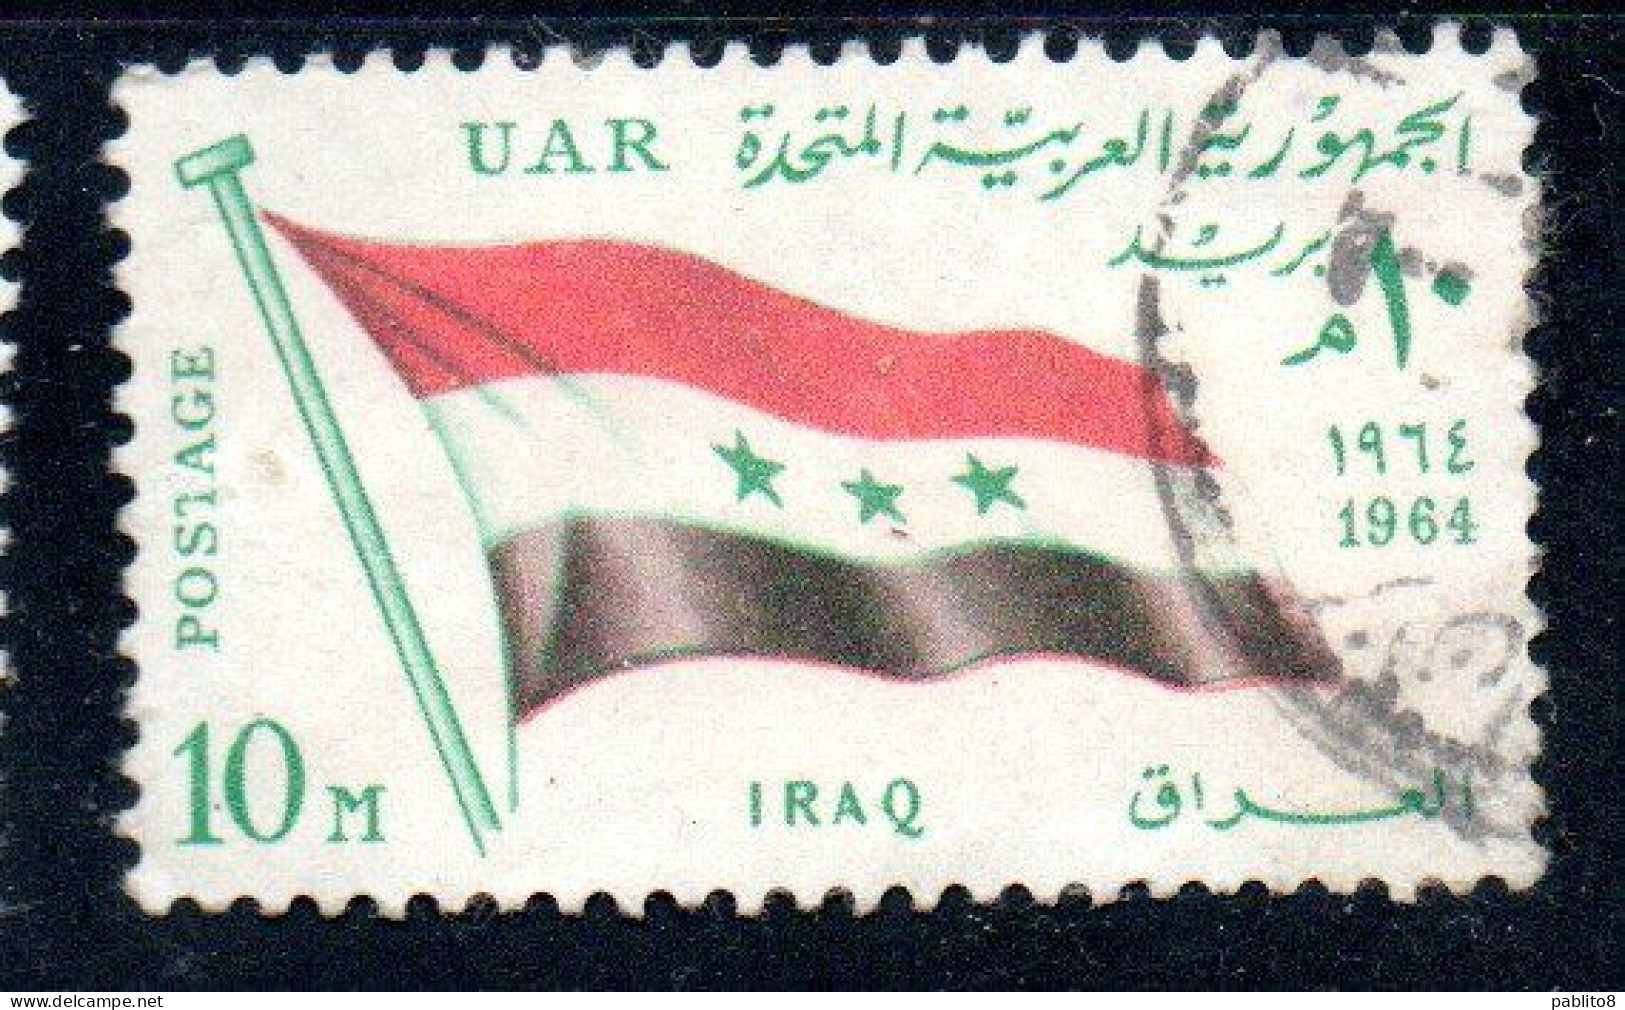 UAR EGYPT EGITTO 1964 SECOND MEETING OF HEADS STATE ARAB LEAGUE FLAG OF IRAQ 10m USED USATO OBLITERE' - Usati